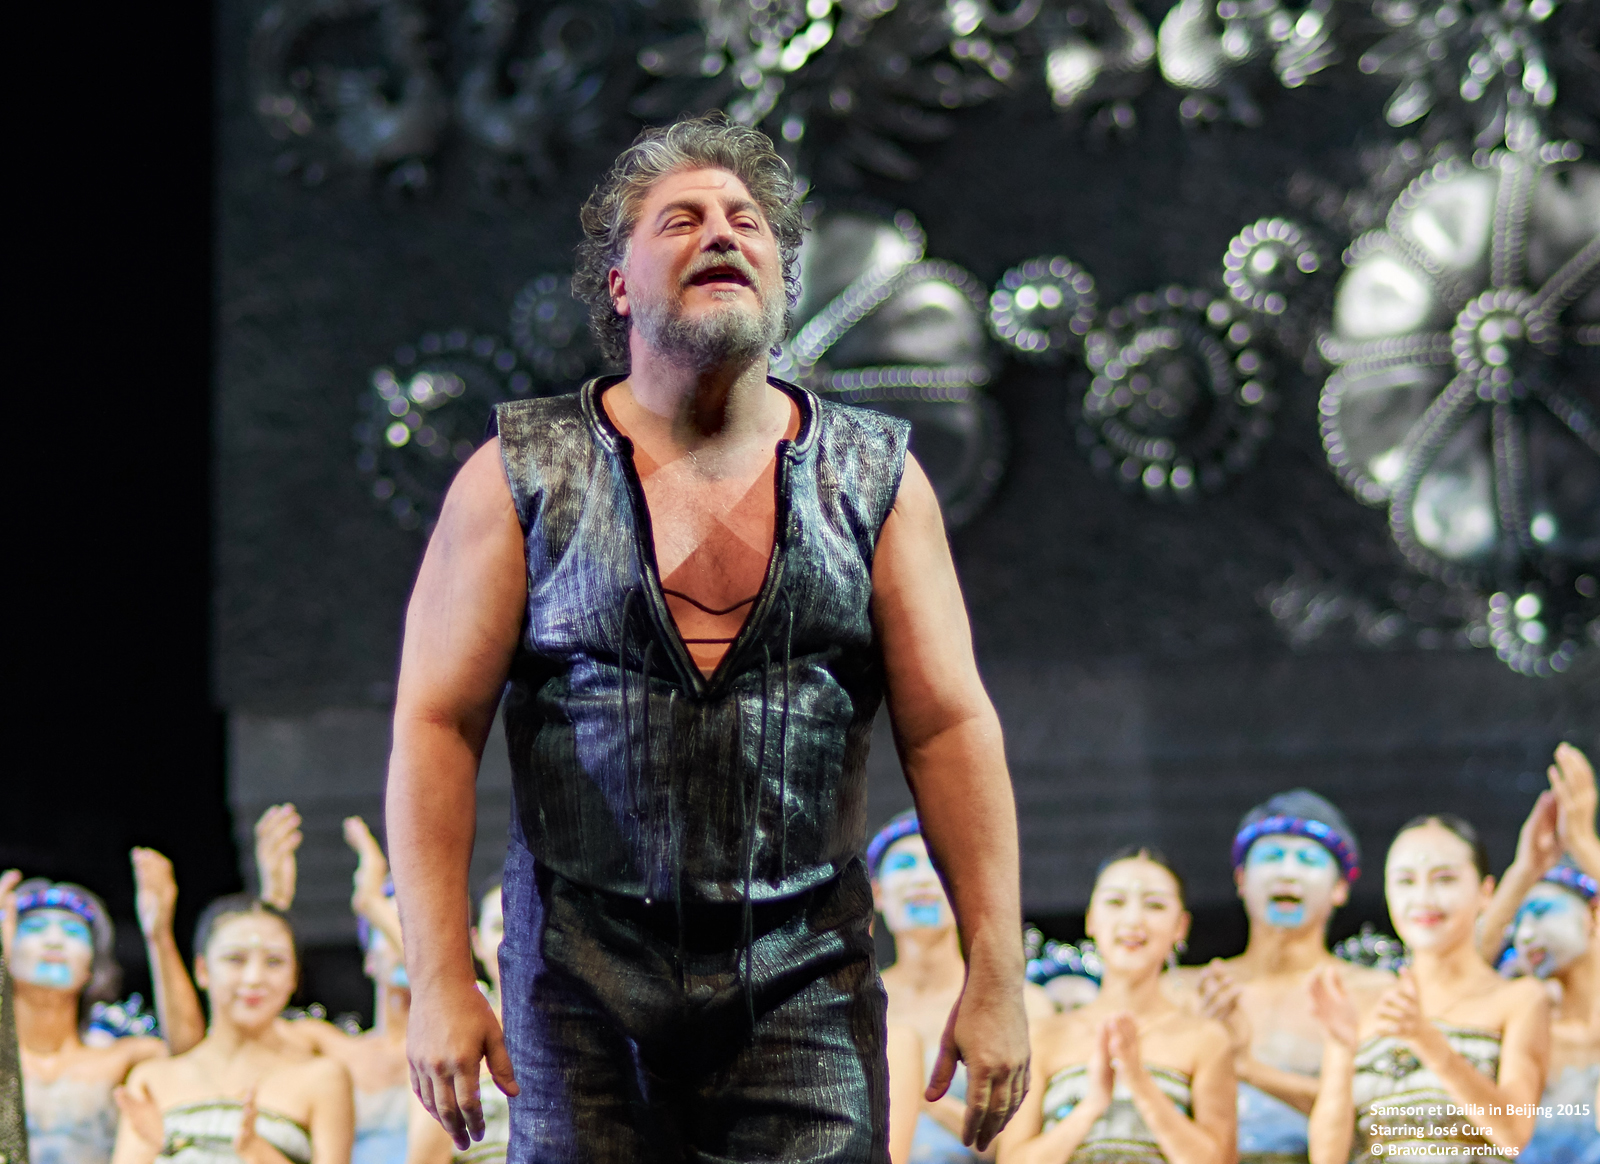 Jos Cura starring as Samson in the 2015 Beijing Opera production of Samsone et Dalila